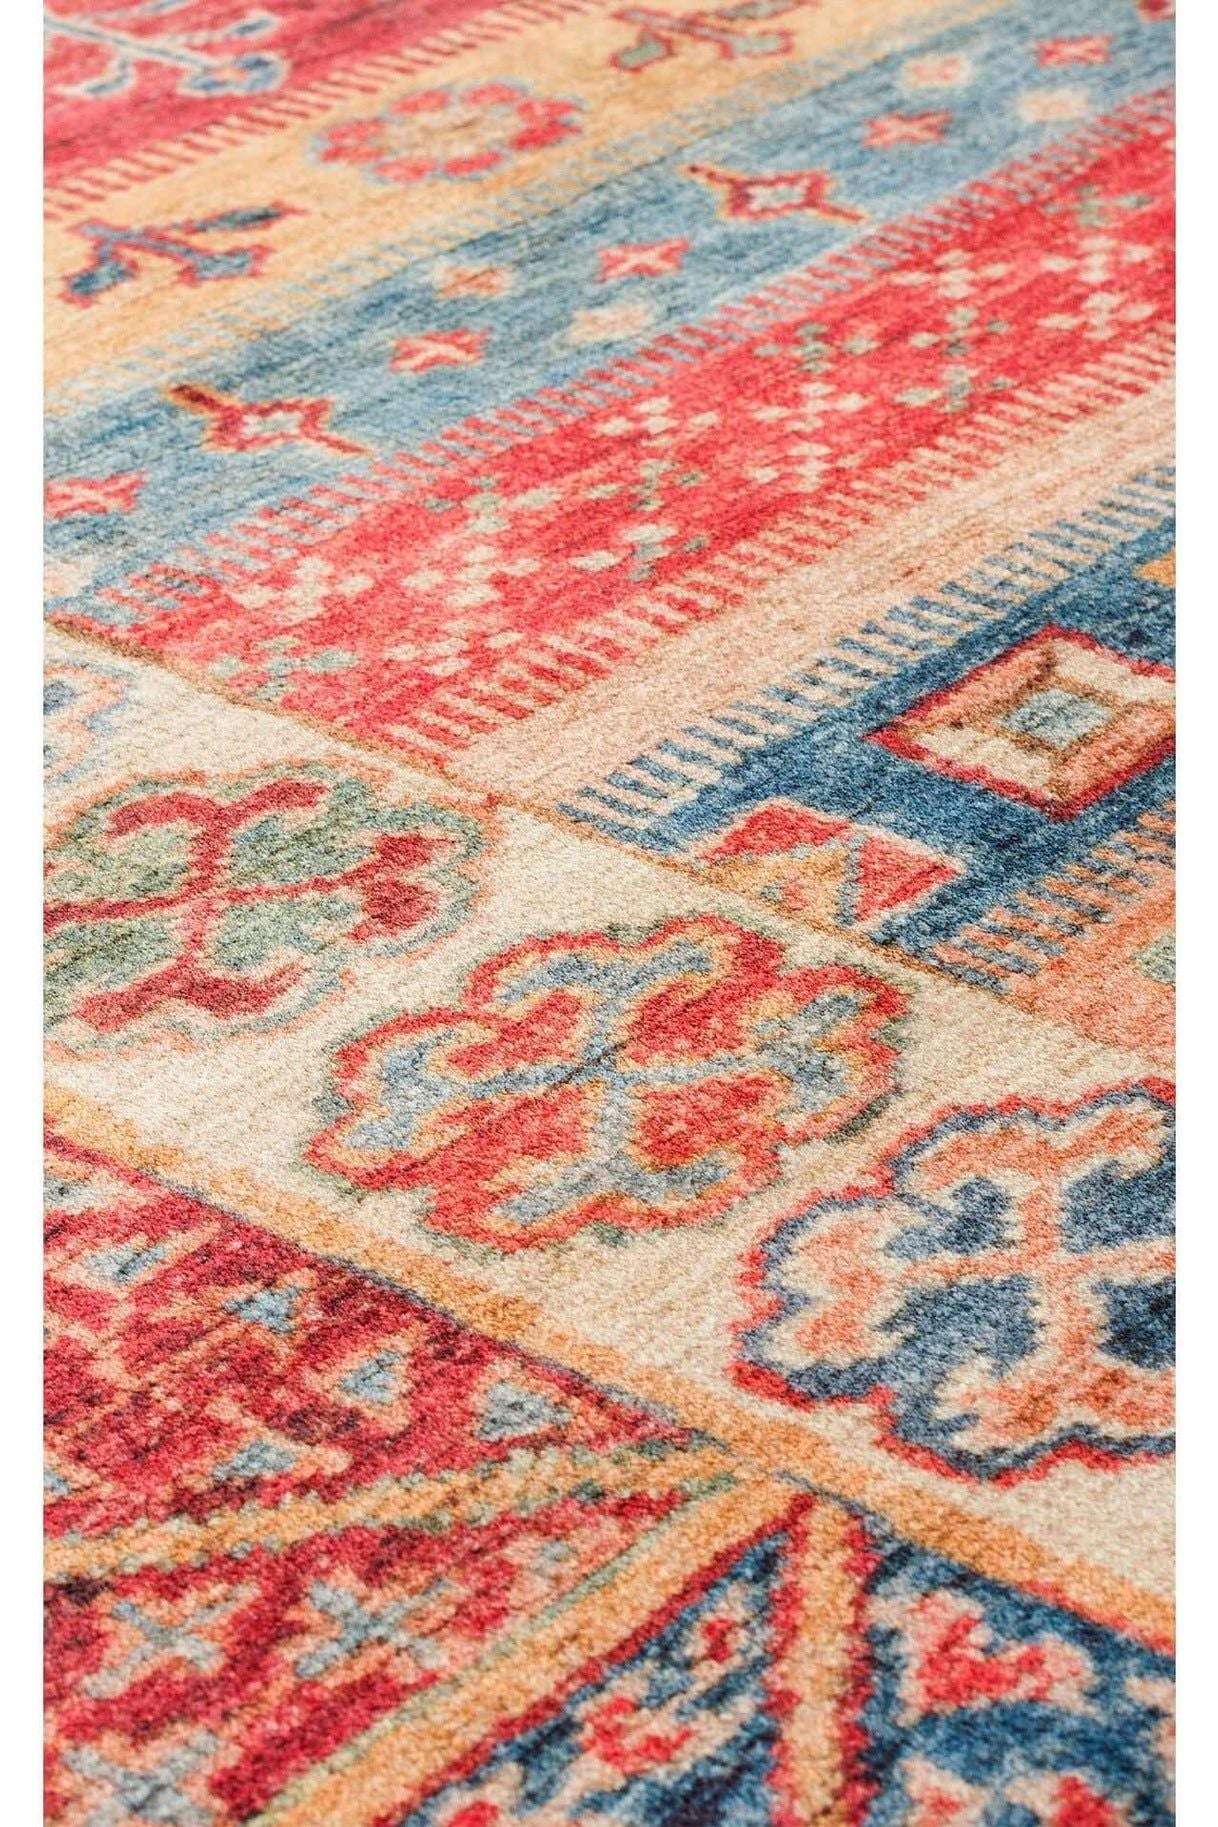 #Turkish_Carpets_Rugs# #Modern_Carpets# #Abrash_Carpets#Atk 04 Multy